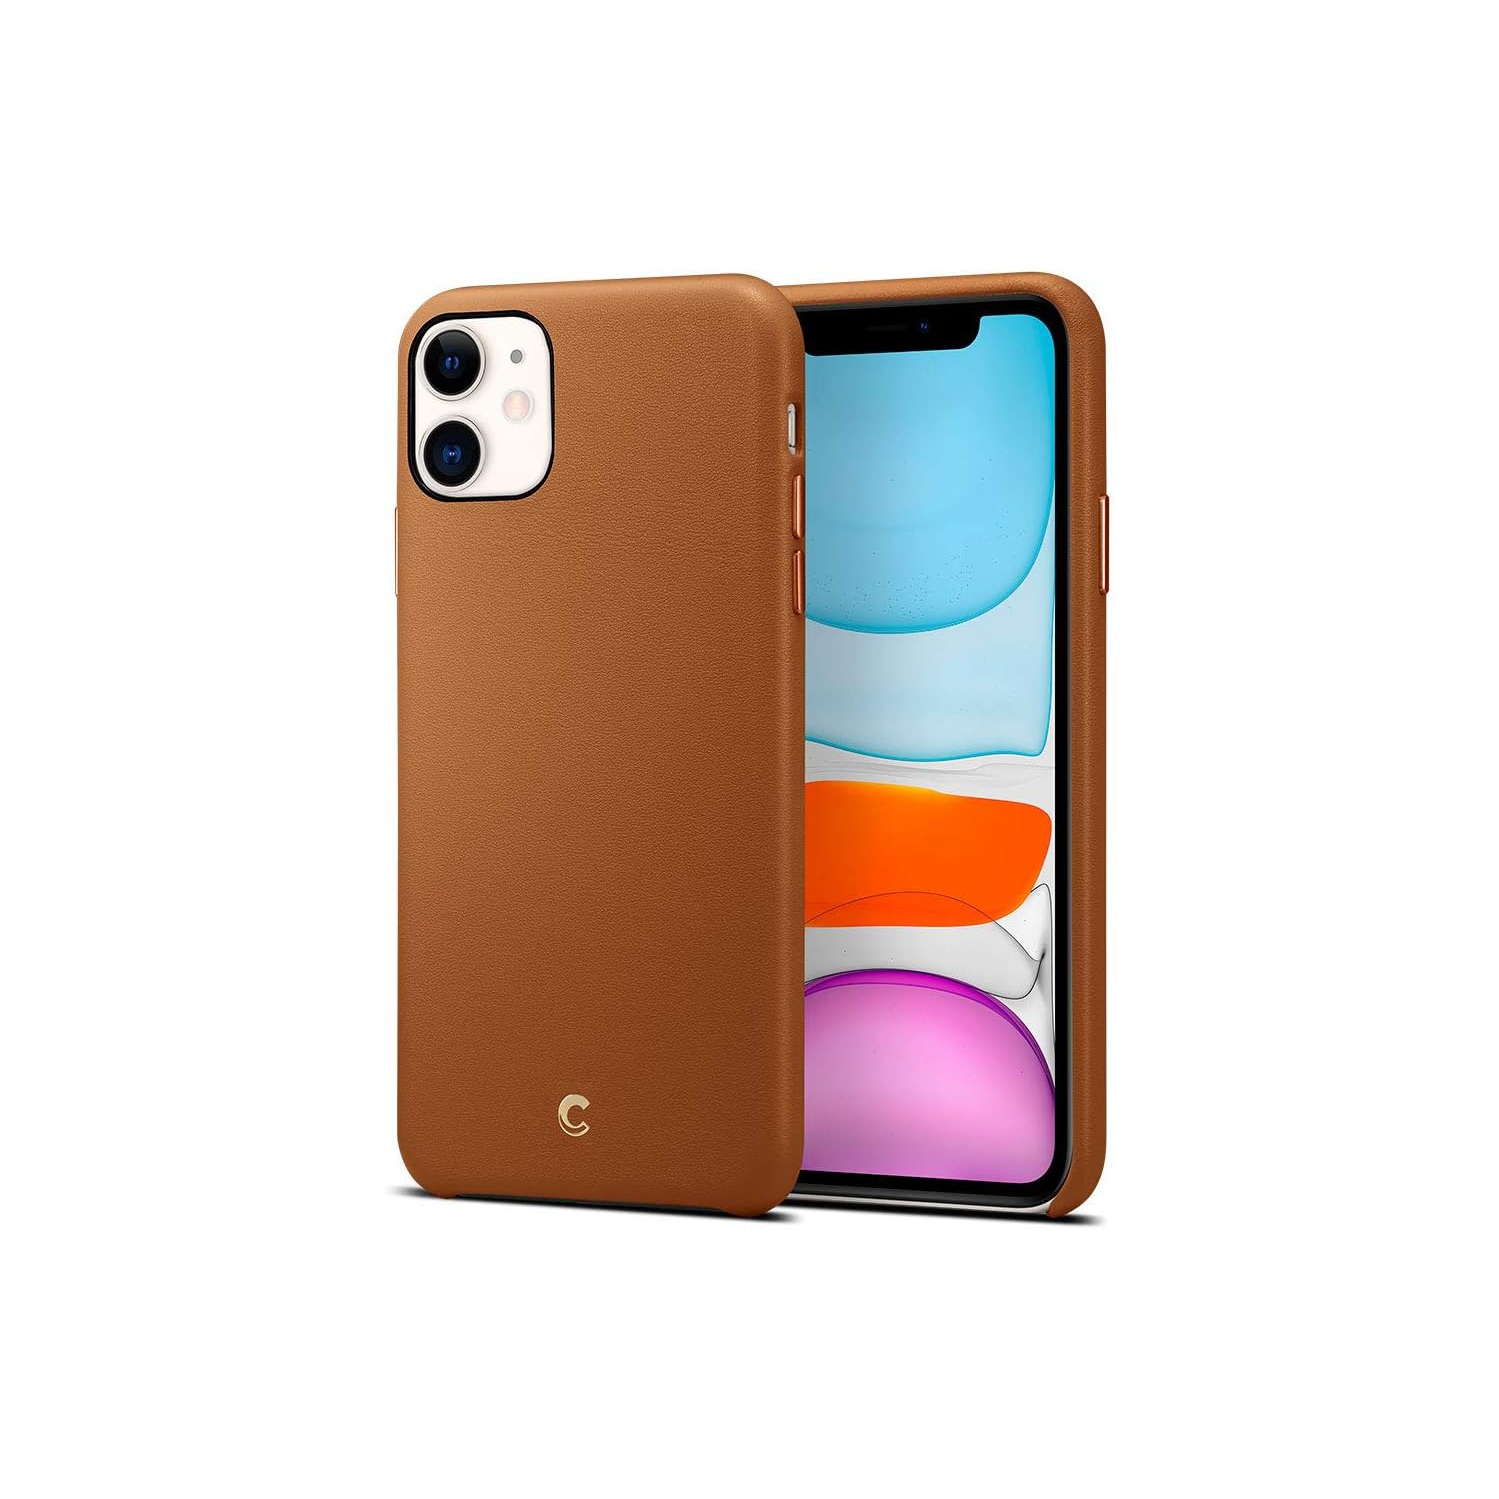 Spigen iPhone 11 Case Basic Leather Designed for iPhone 11 Case Cover (2019) - Saddle Brown